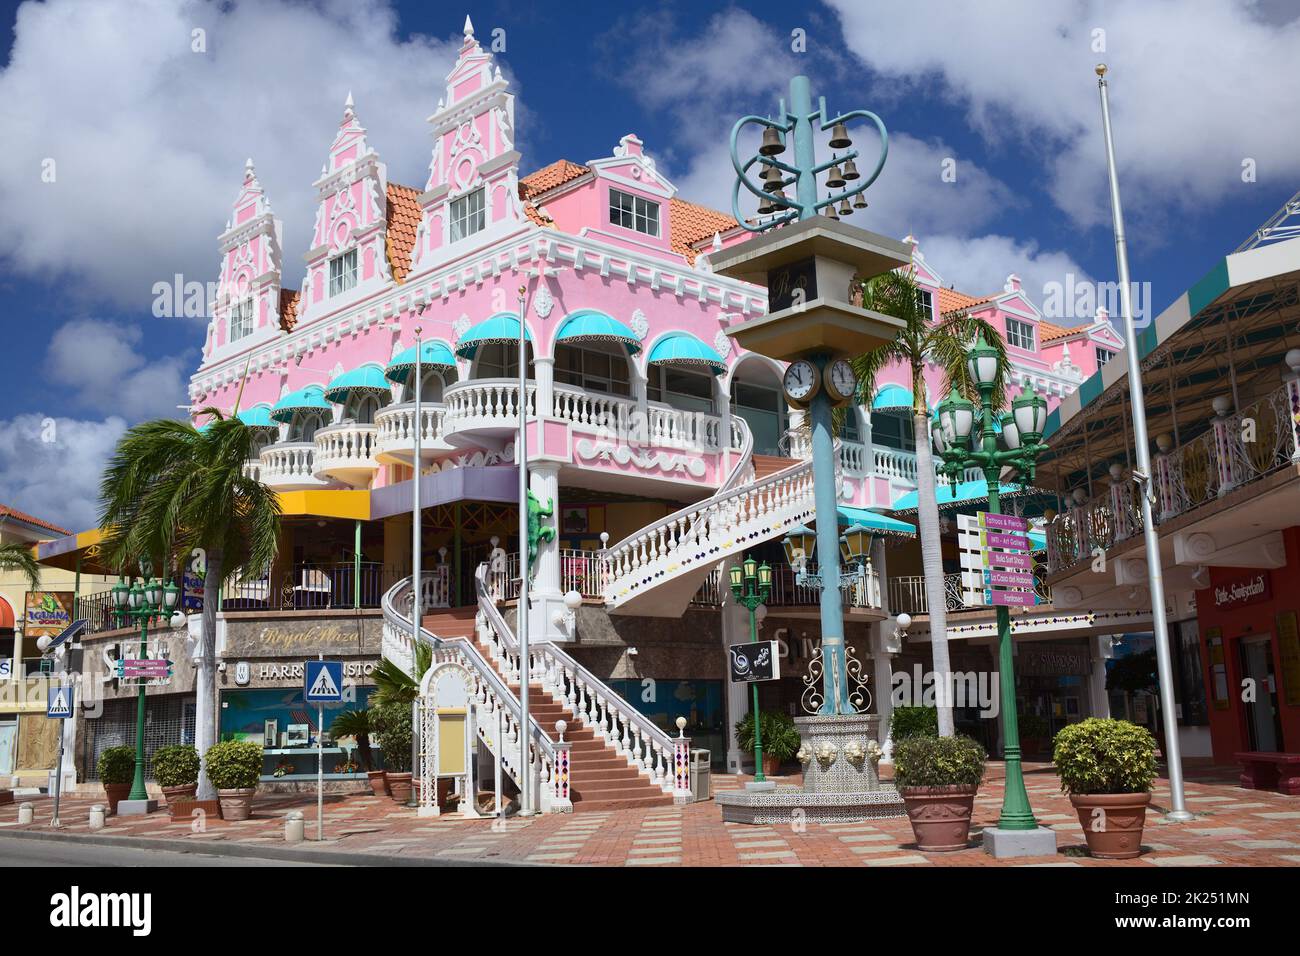 Oranjestad Aruba's Shopping Gems: Renaissance Mall & Royal Plaza